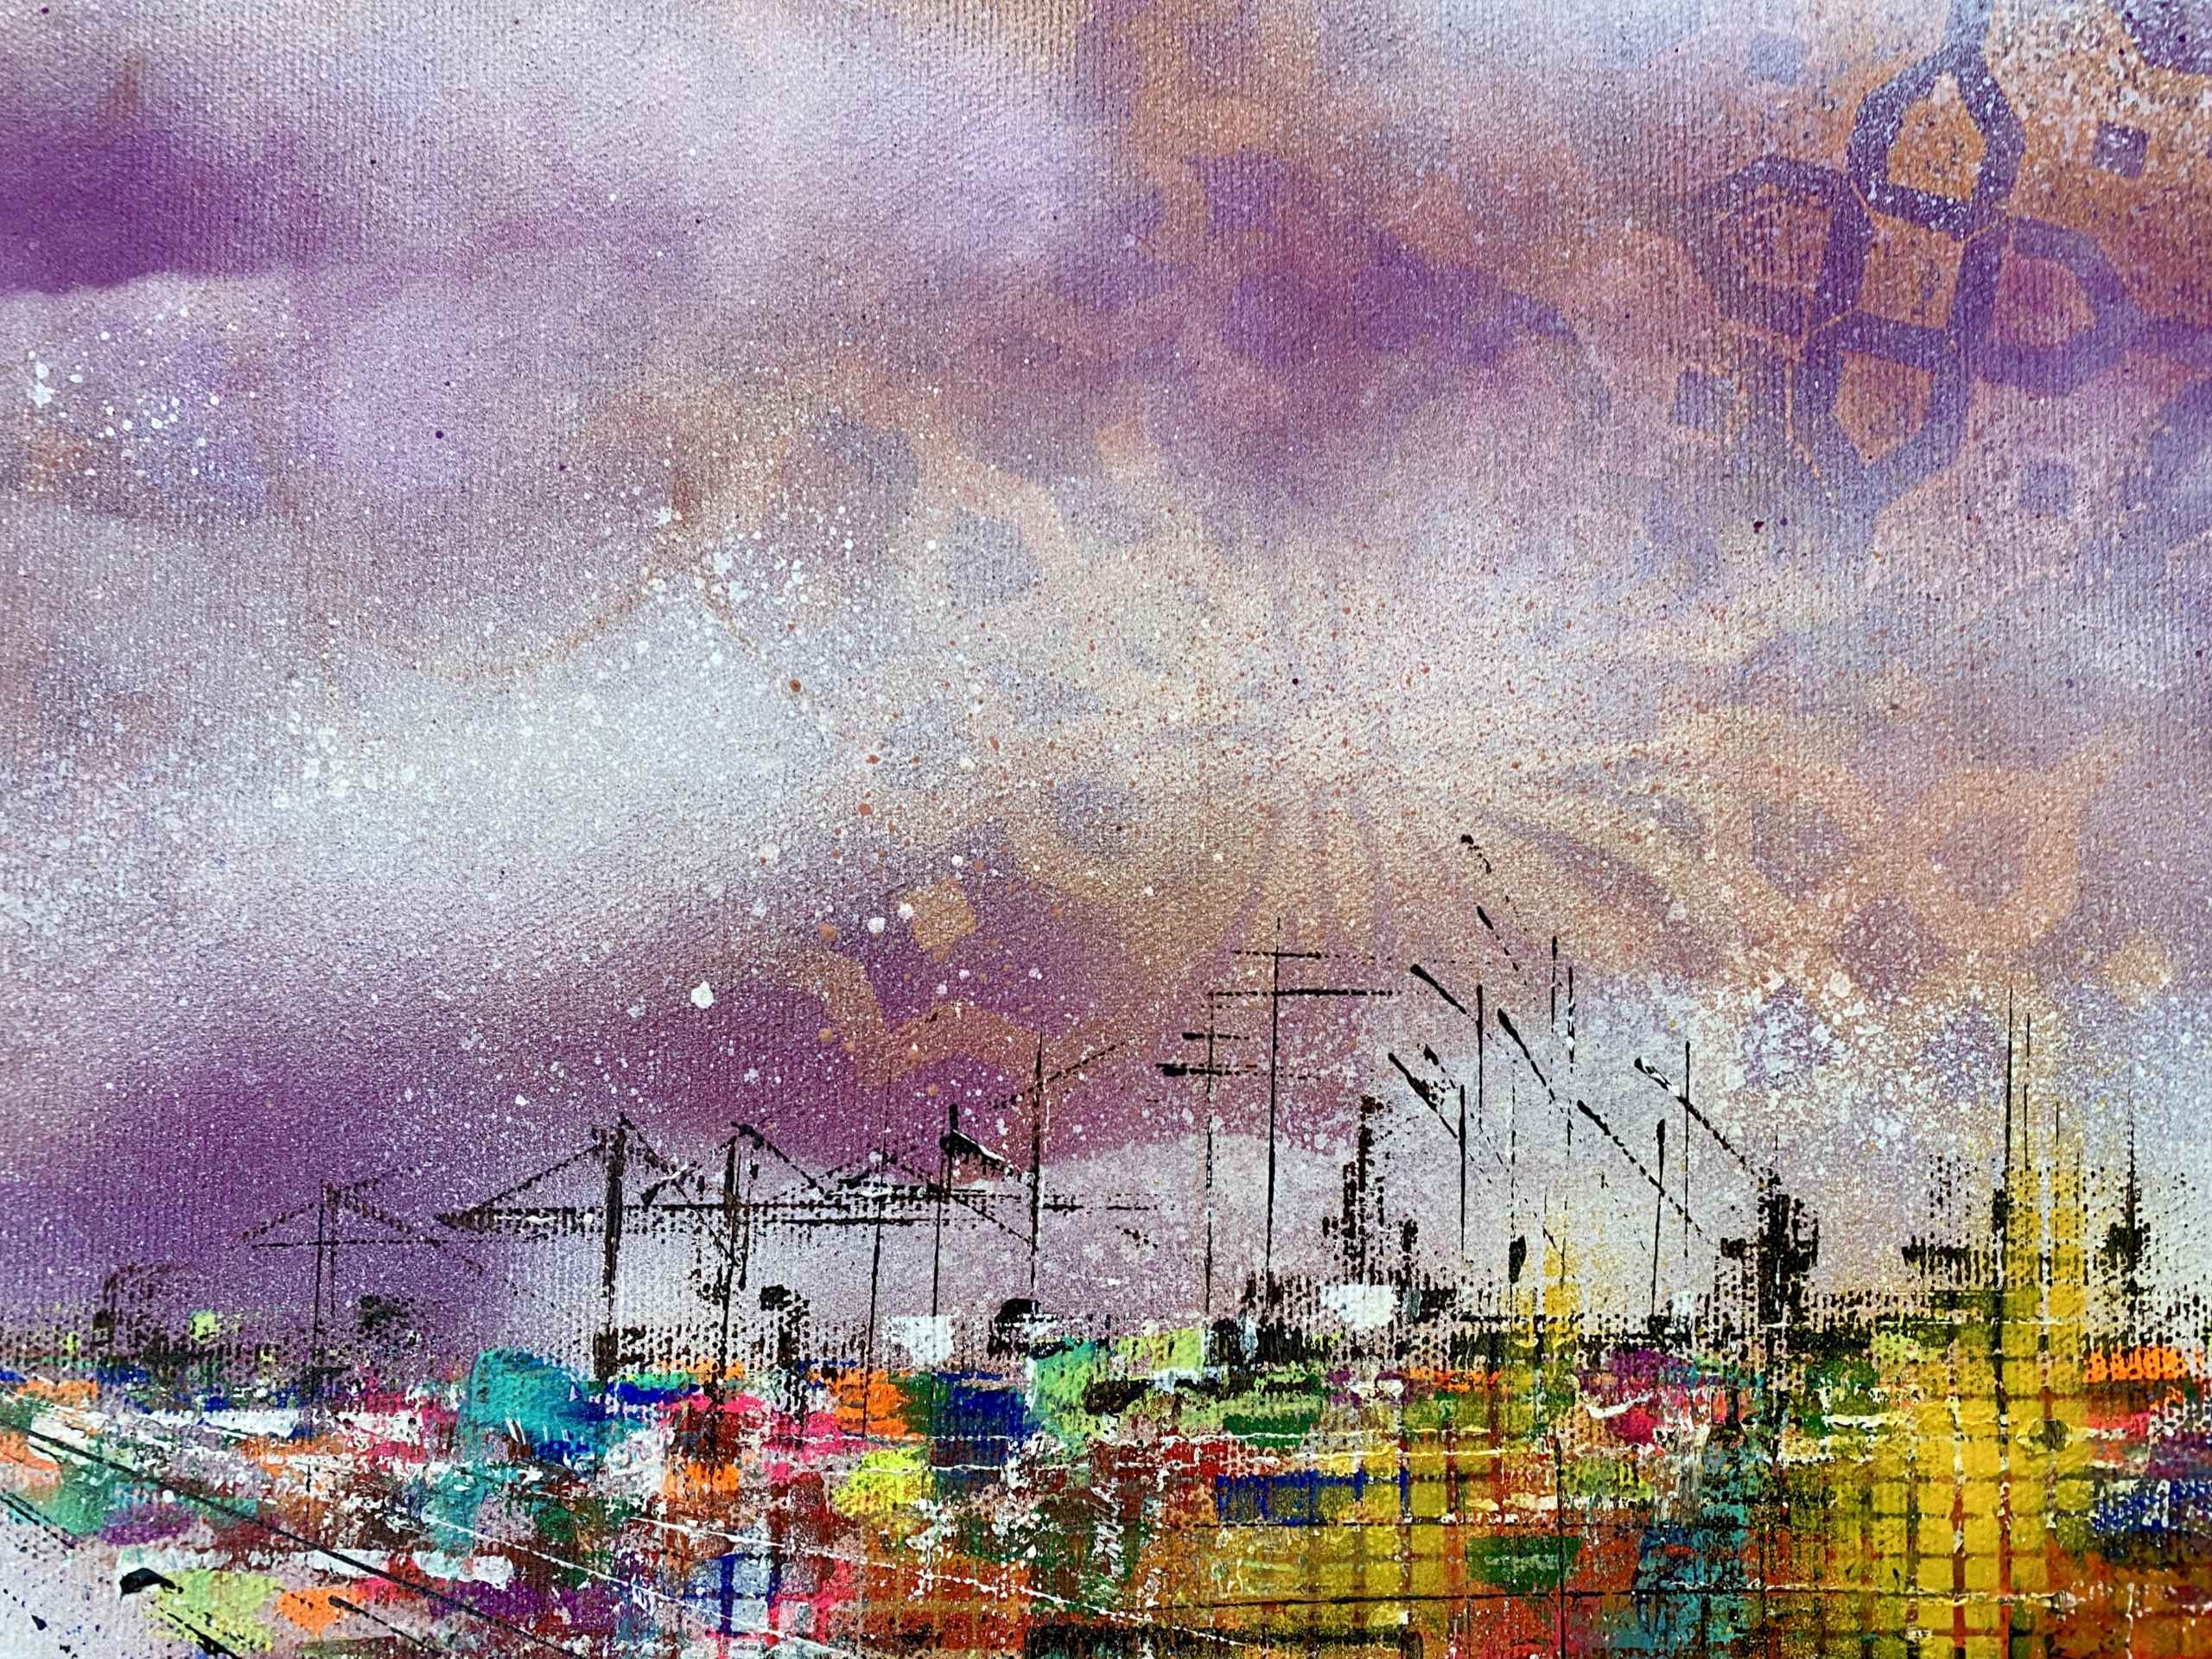 Detail of artwork "Purple Clouds" by Nina Groth